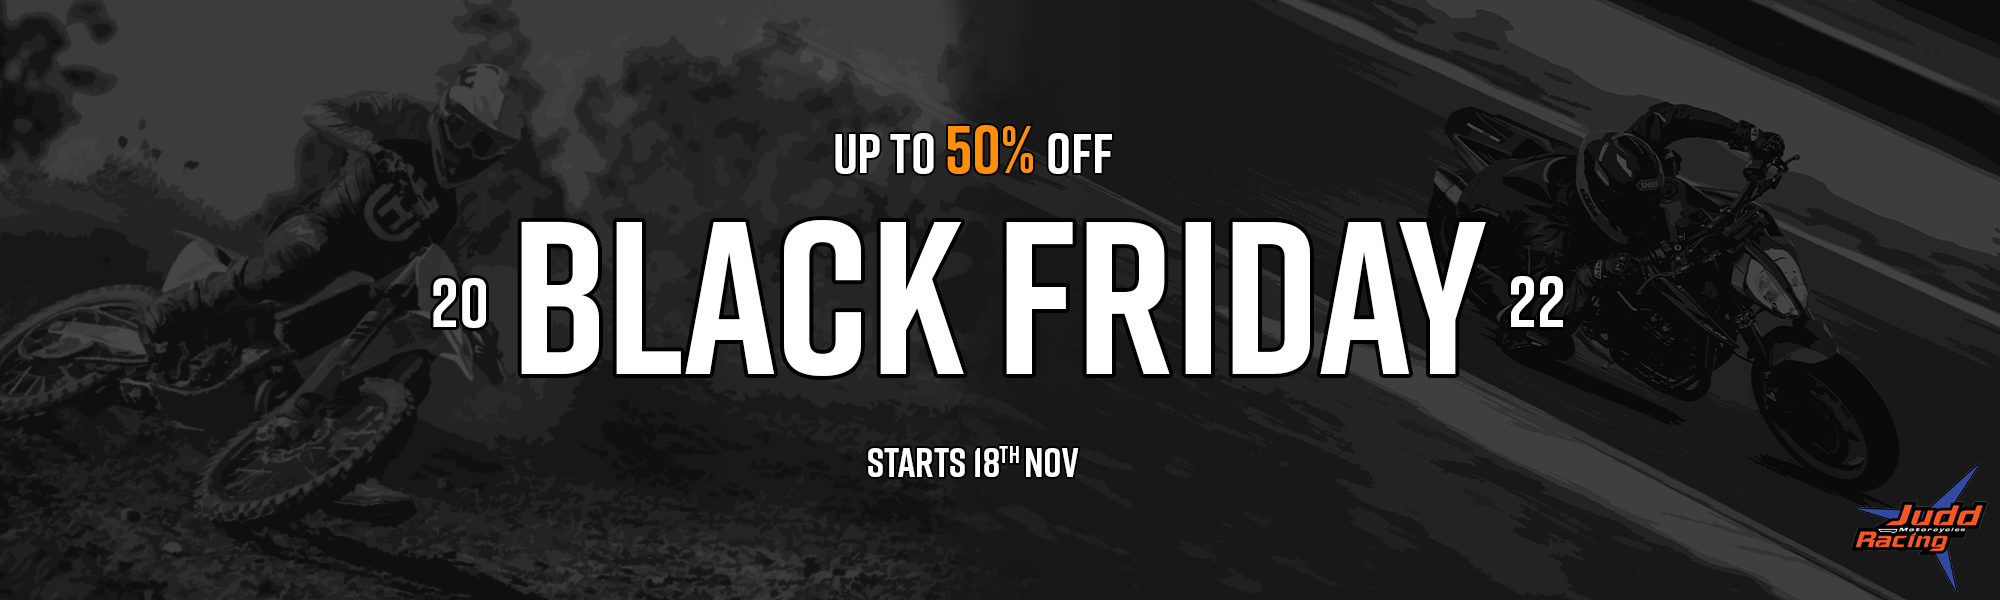 Black Friday. Up to 50% off. Starts 18th November.